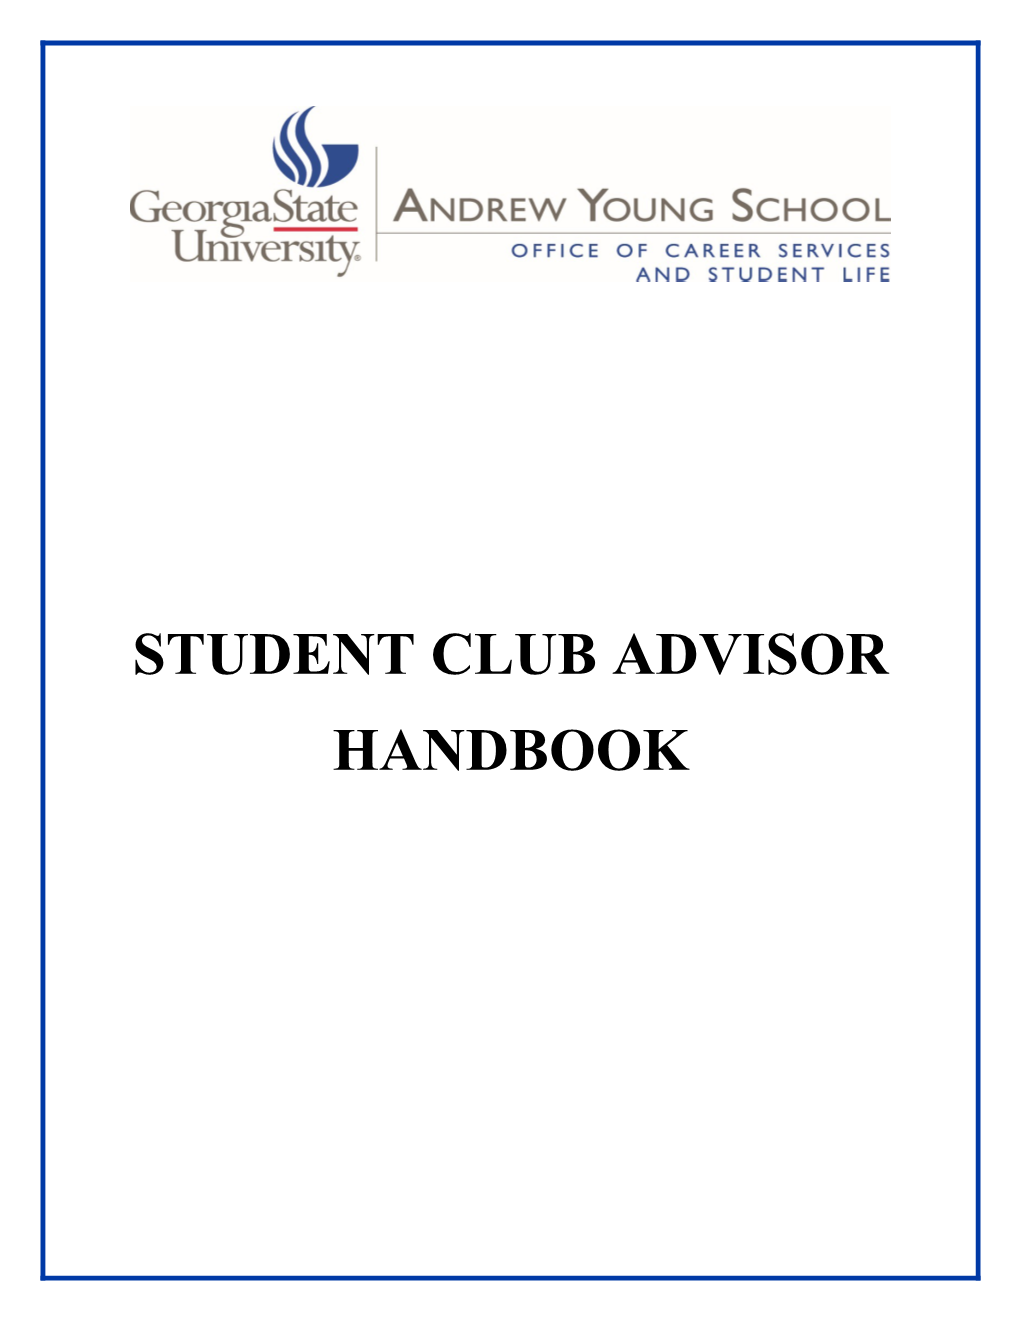 Student Club Advisor